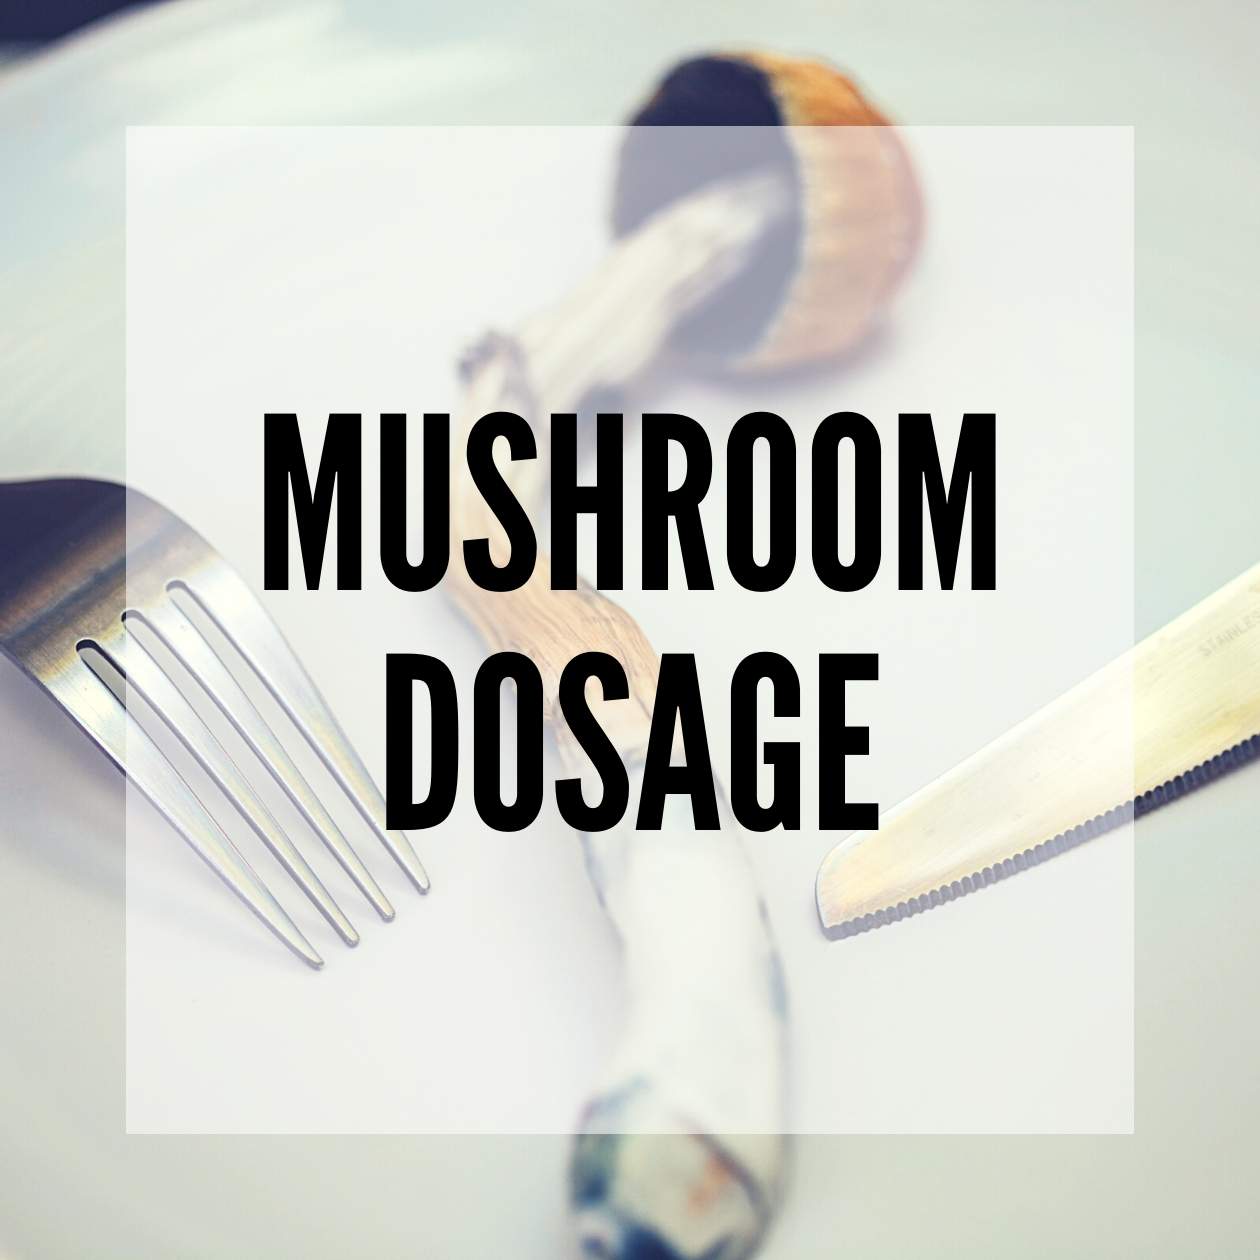 Mushroom dosage blog post thumbnail